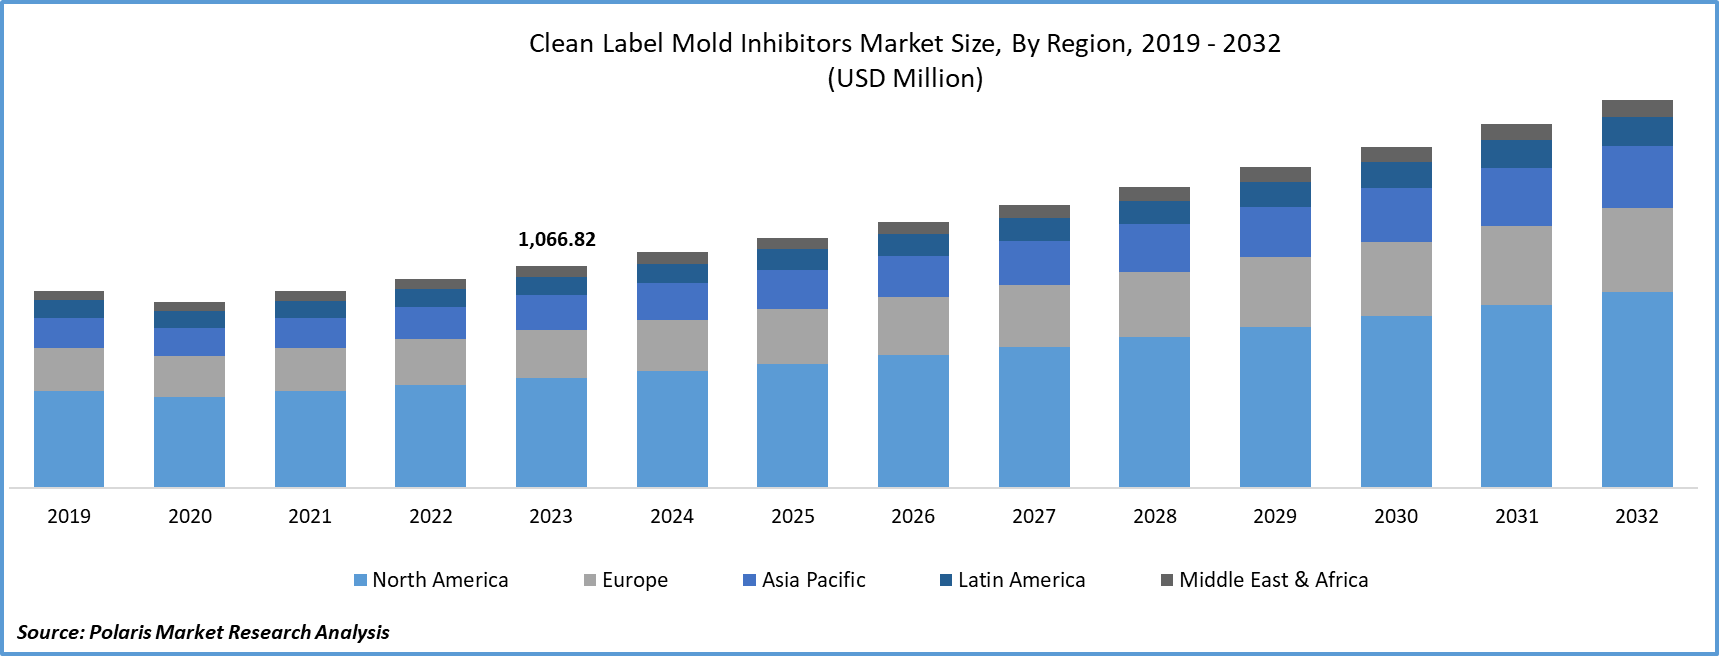 Clean Label Mold Inhibitors Market Size